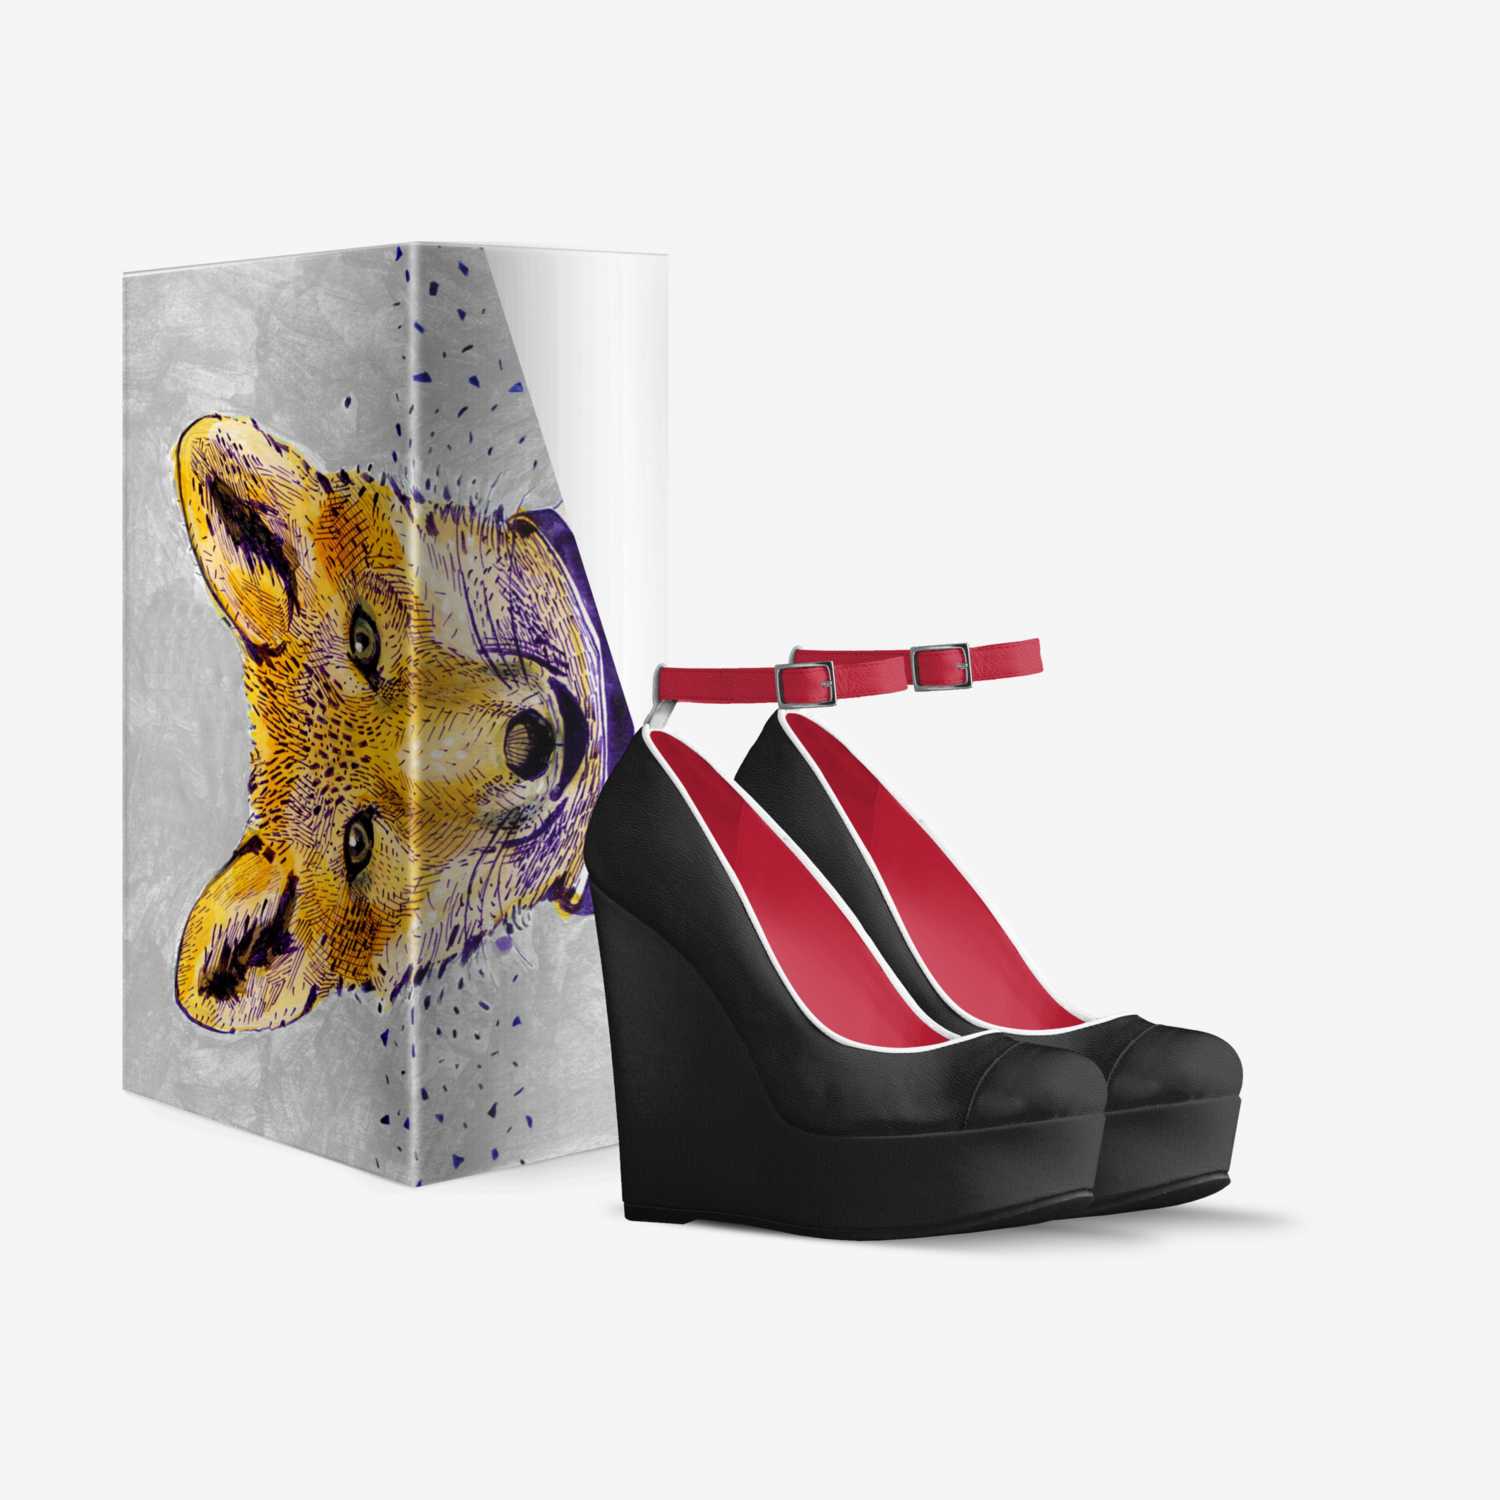 Miquatti's custom made in Italy shoes by Kayra Yavuz | Box view